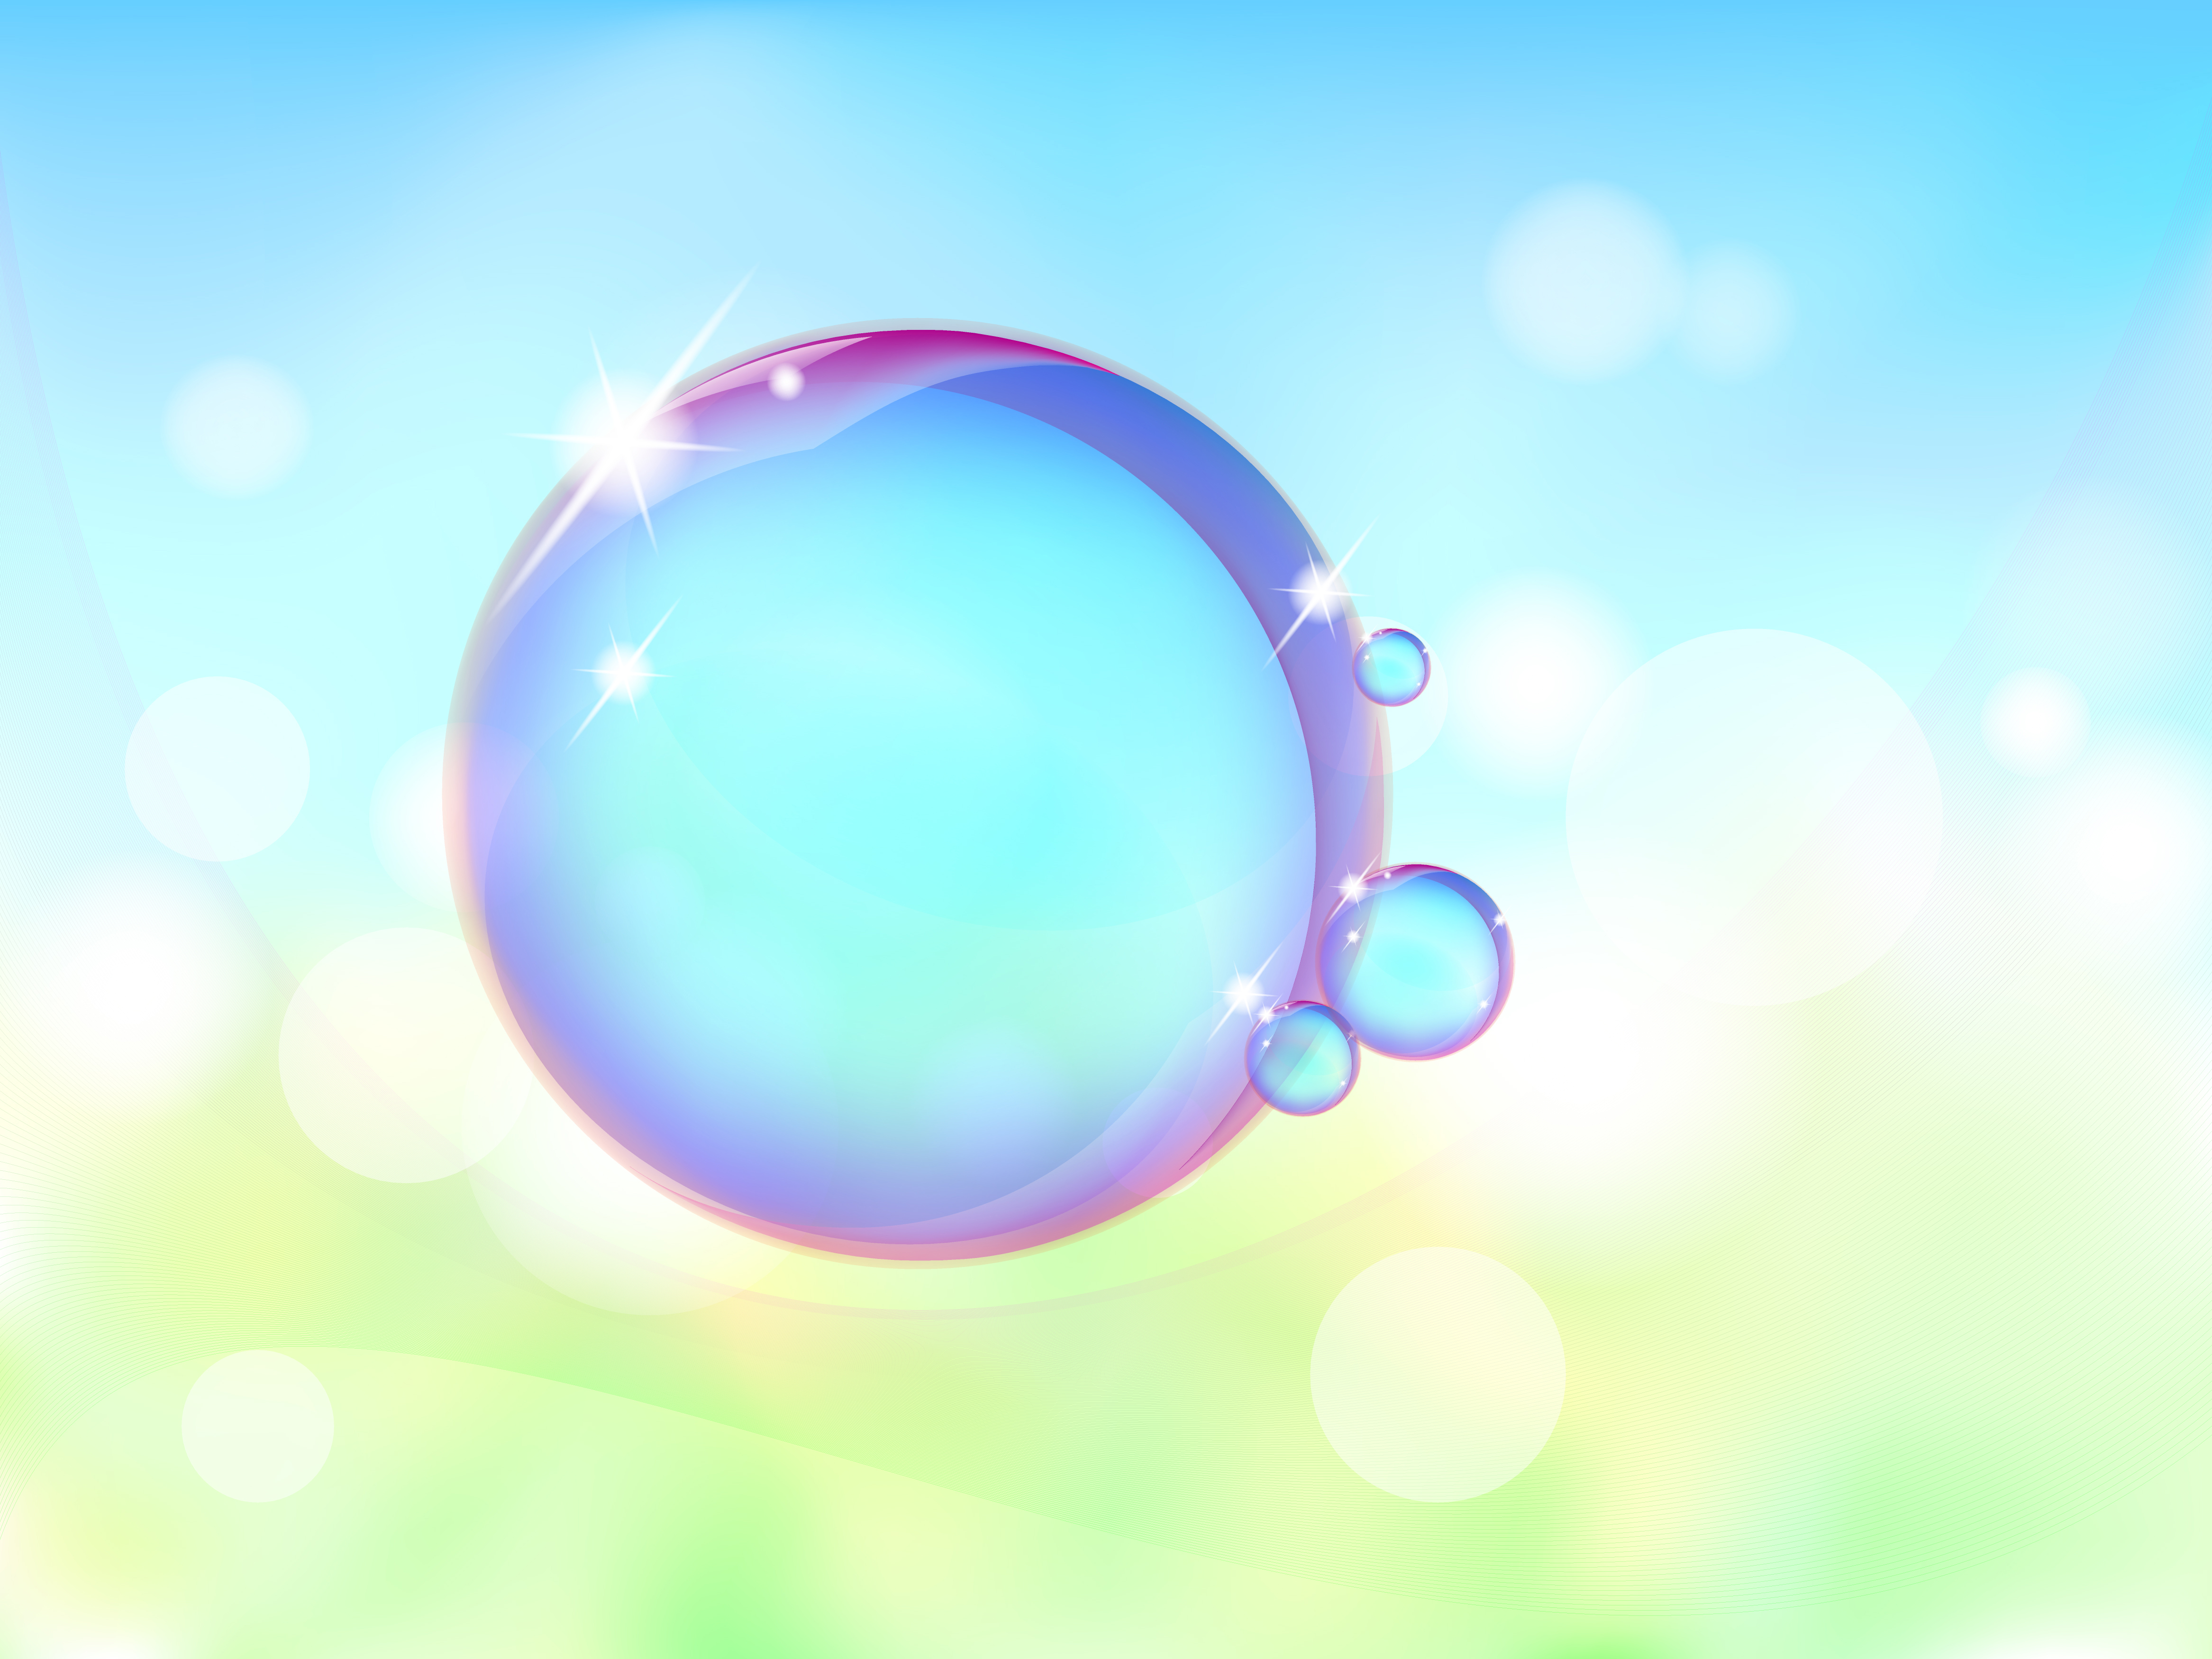 Transparent bubble on vector graphic art. 633524 Vector